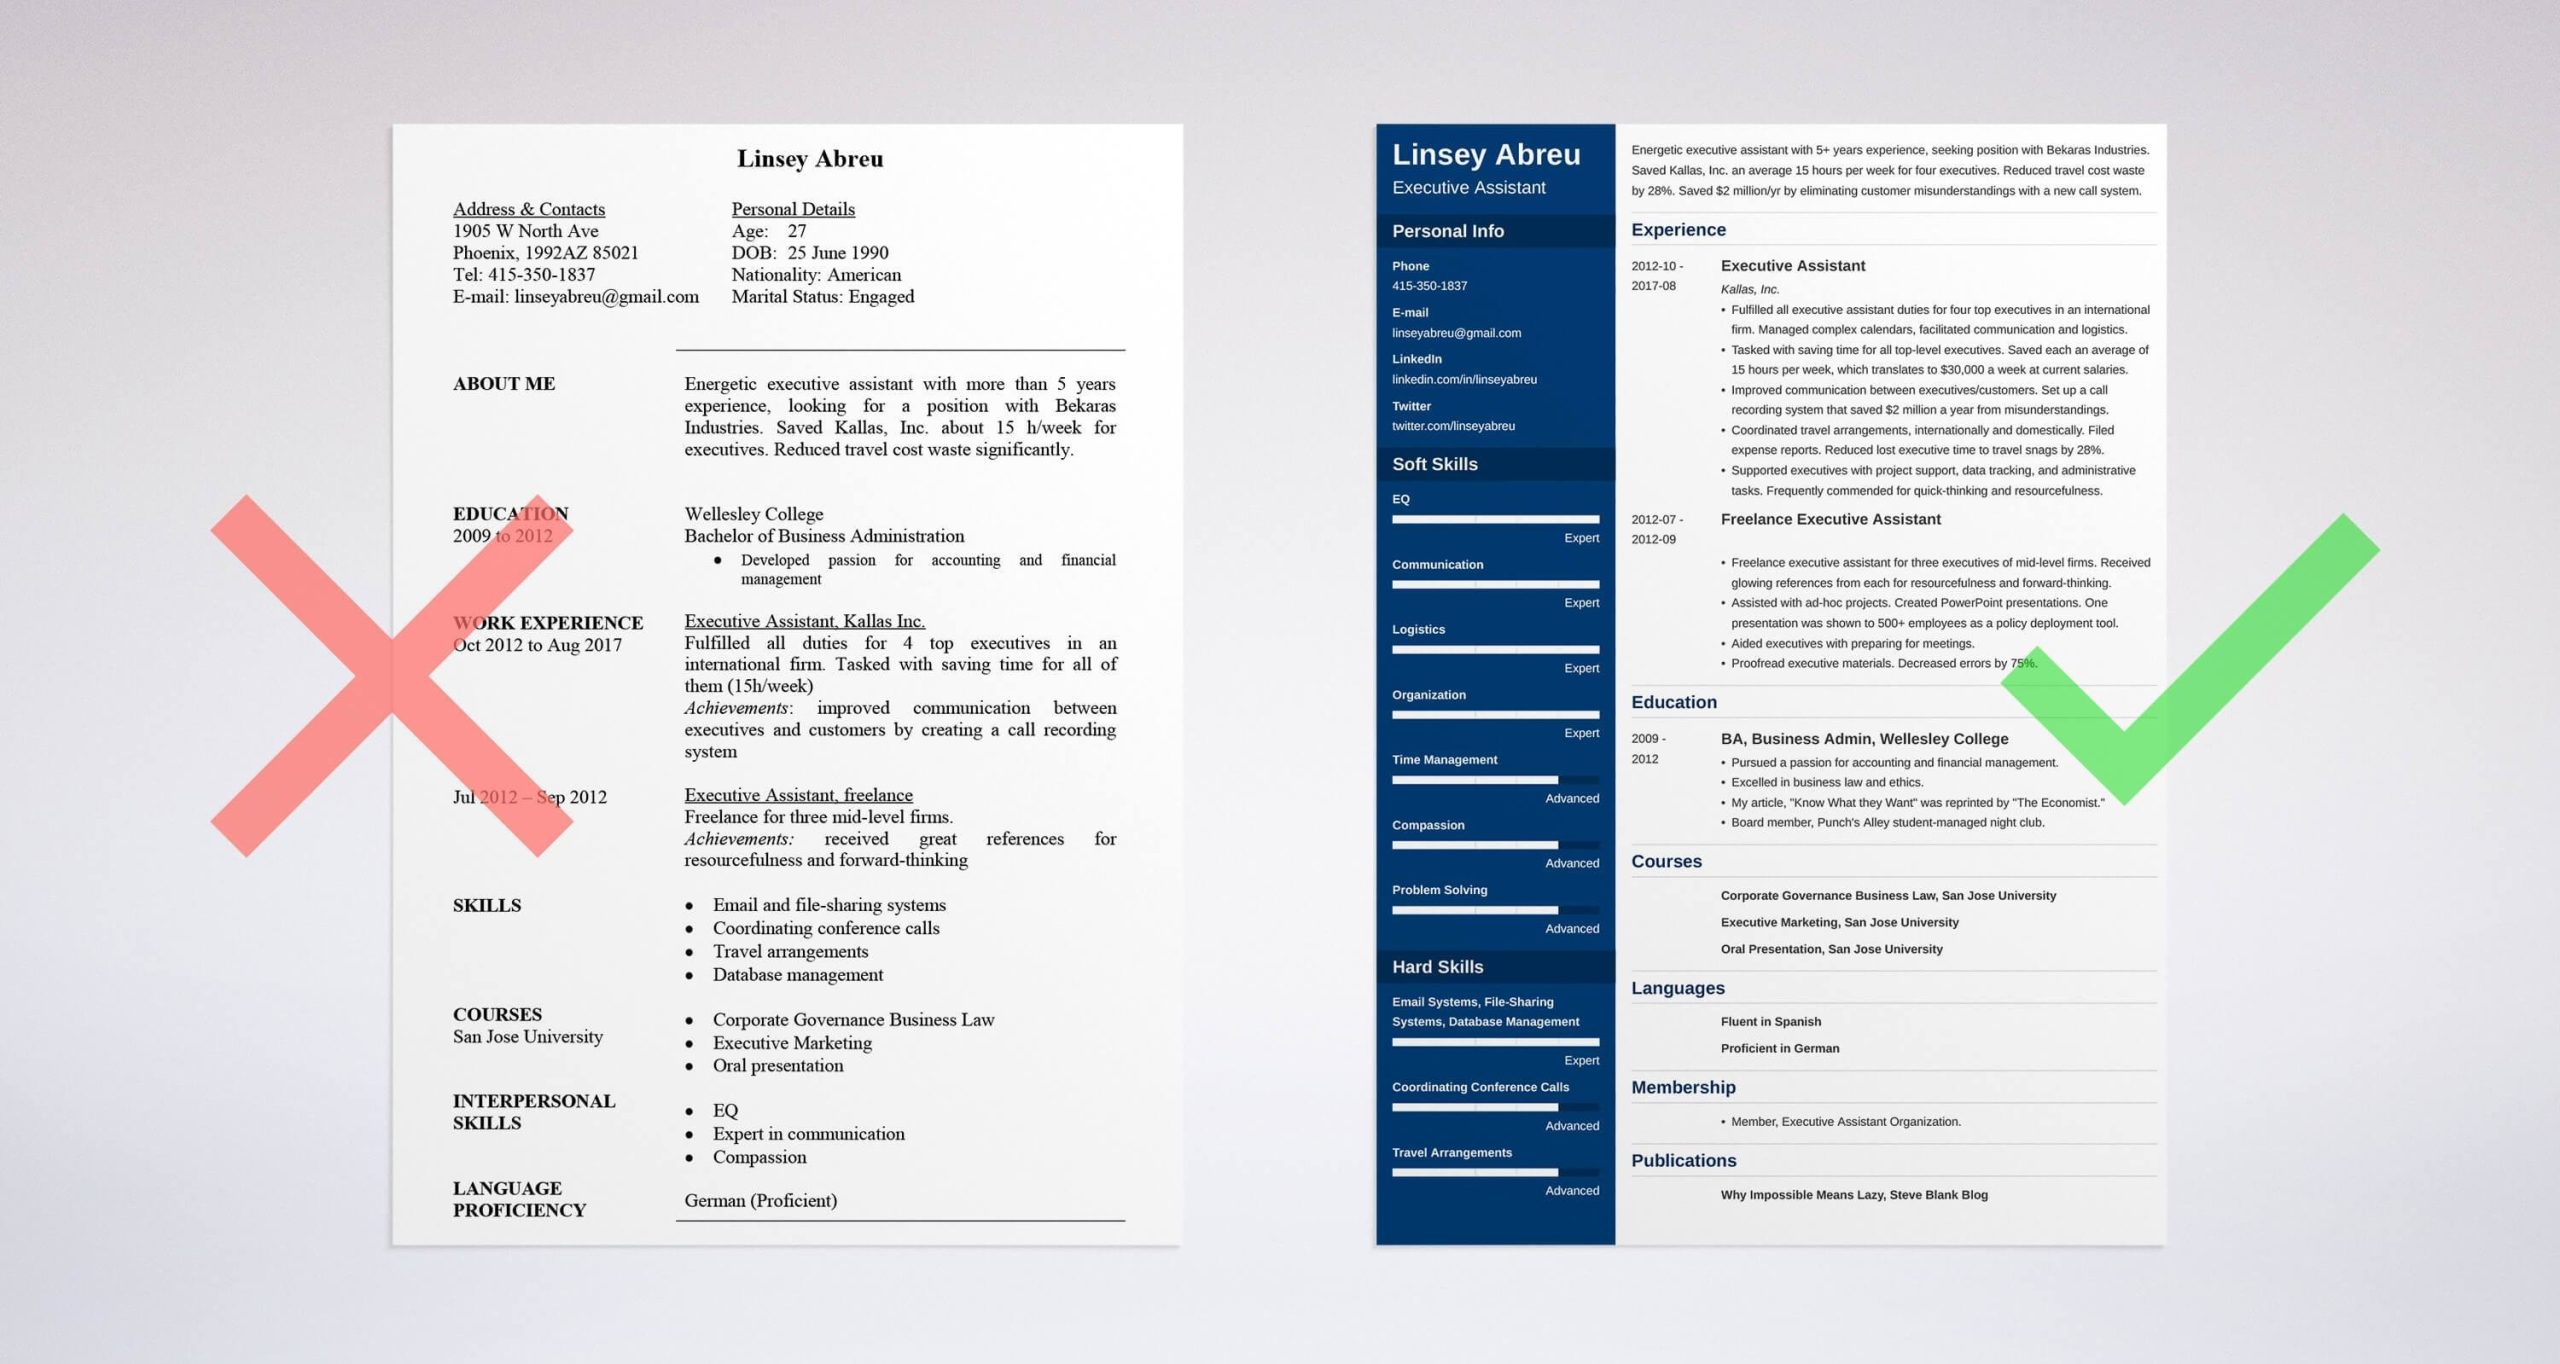 Business Analyst with Aladdin Sample Resume Executive assistant Resume Sample [lancarrezekiqskills & Objective]